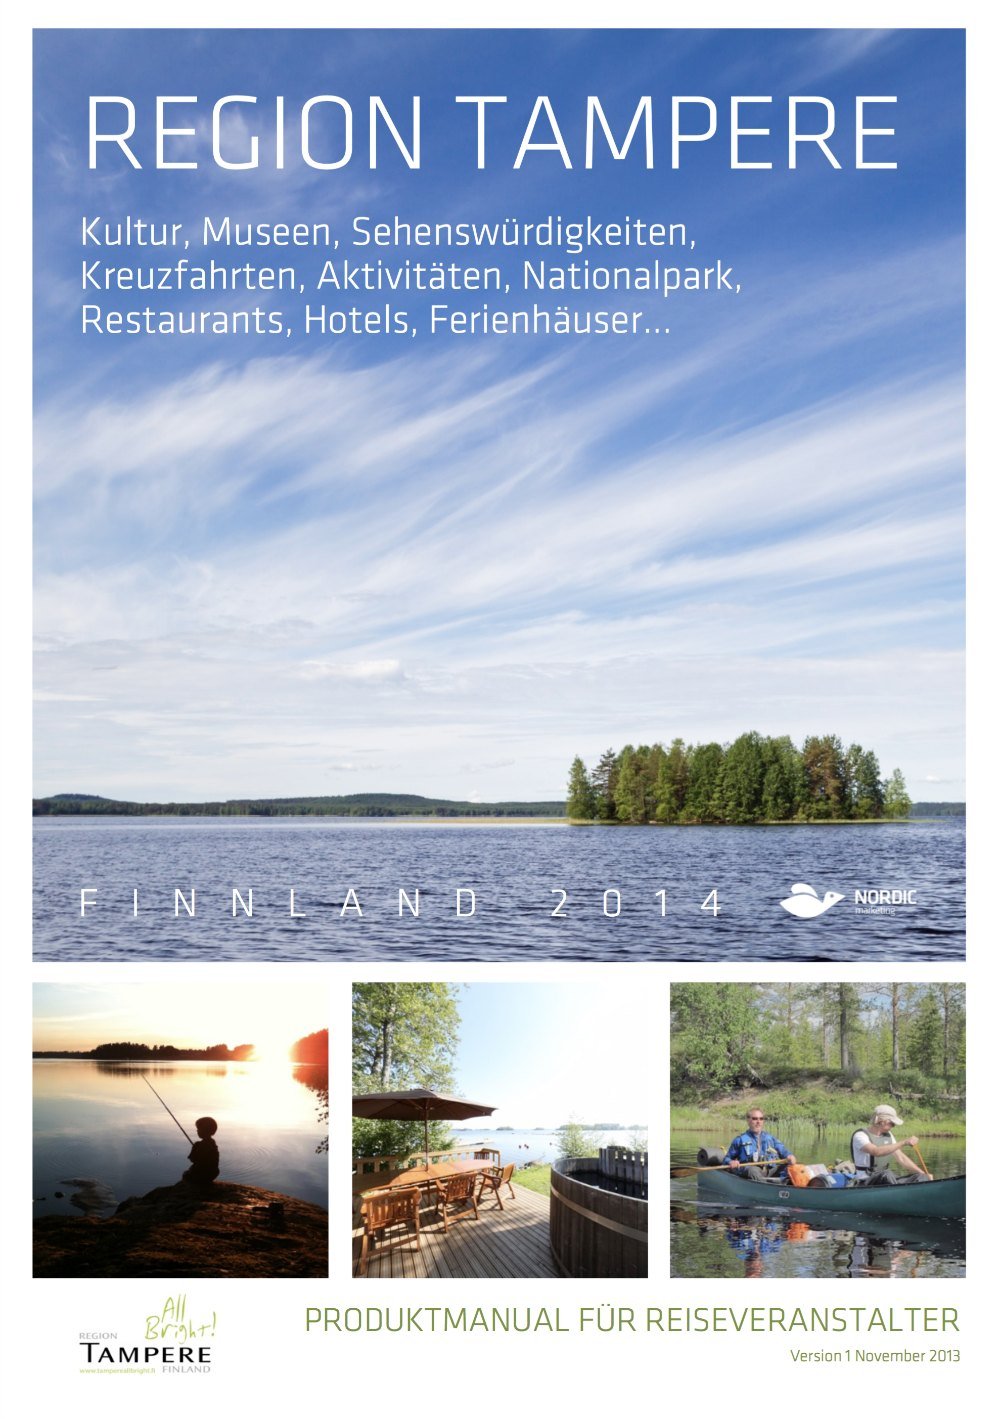 Region Tampere Produktmanual Cover